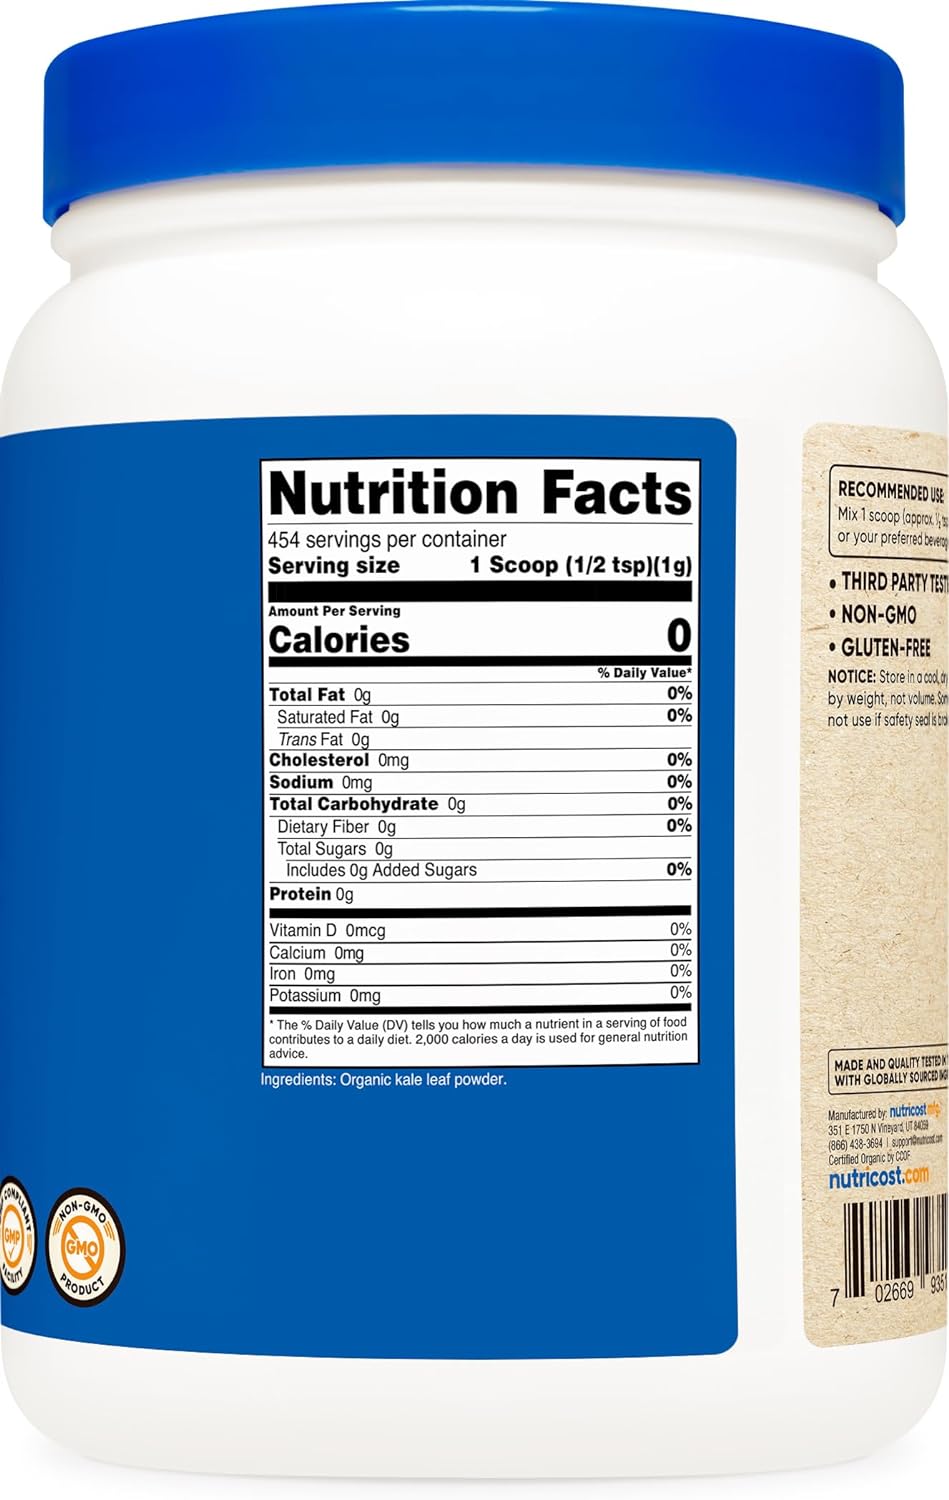 Nutricost Organic Kale Powder 1LB - All Natural, Non-GMO, Gluten Free, Certified USDA Organic Kale : Baby